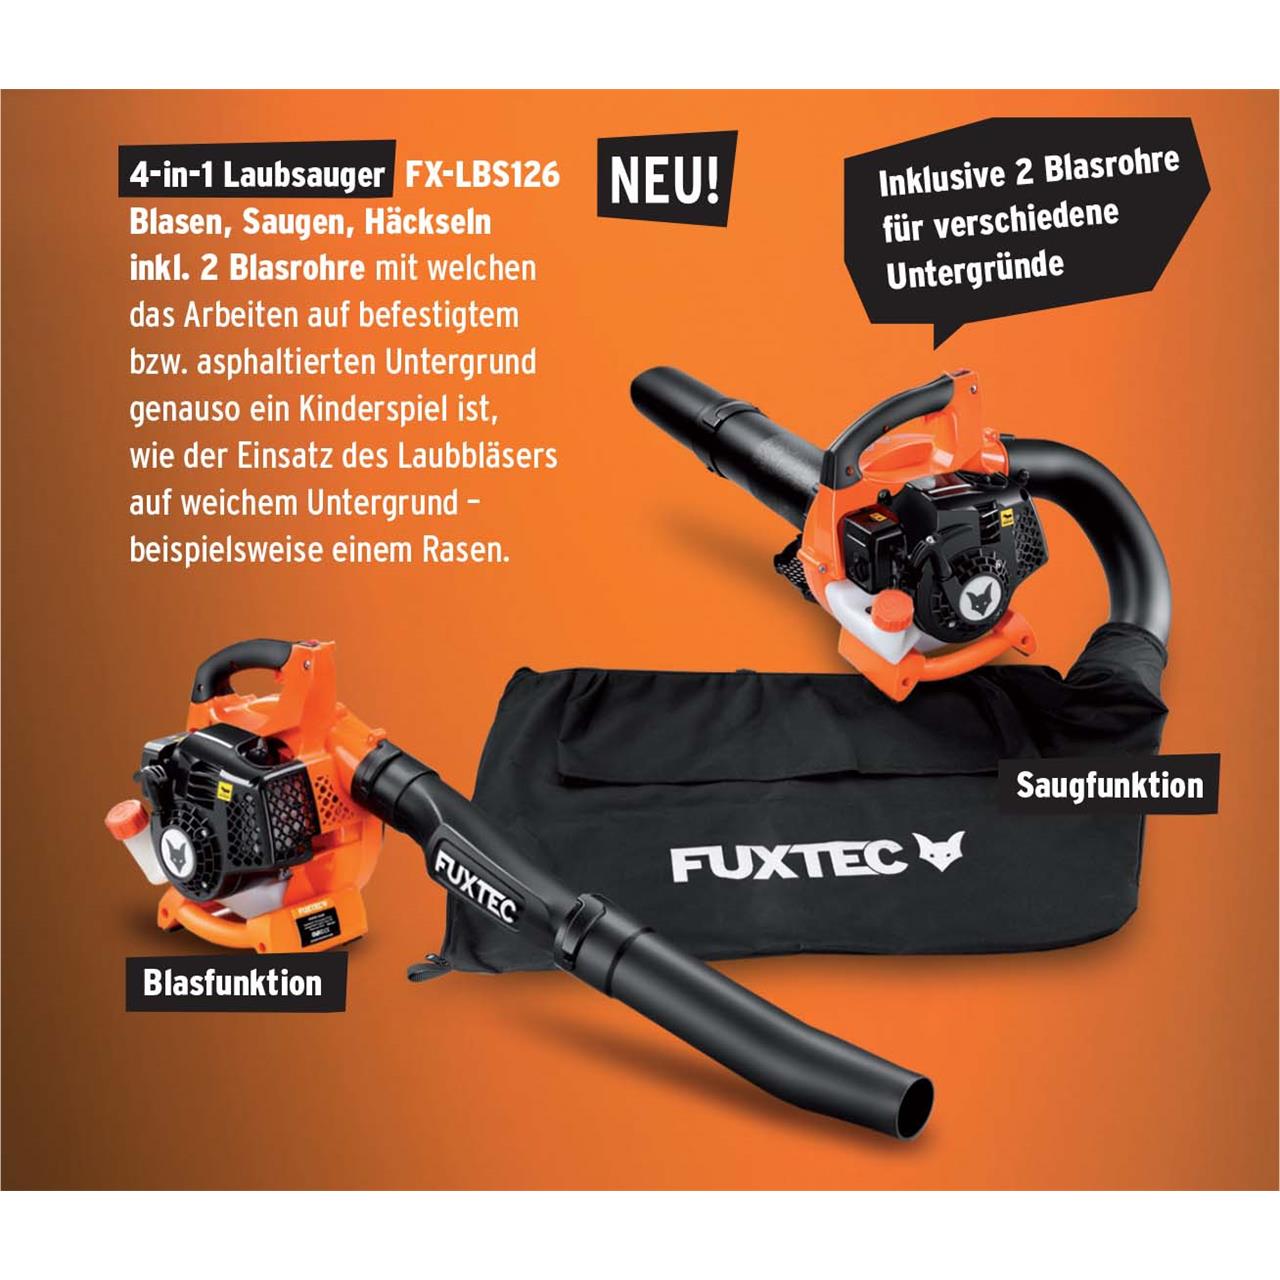 B-Ware FUXTEC FX-LBS126 4in1 Laubsauger Laubbläser Laubhäcksler